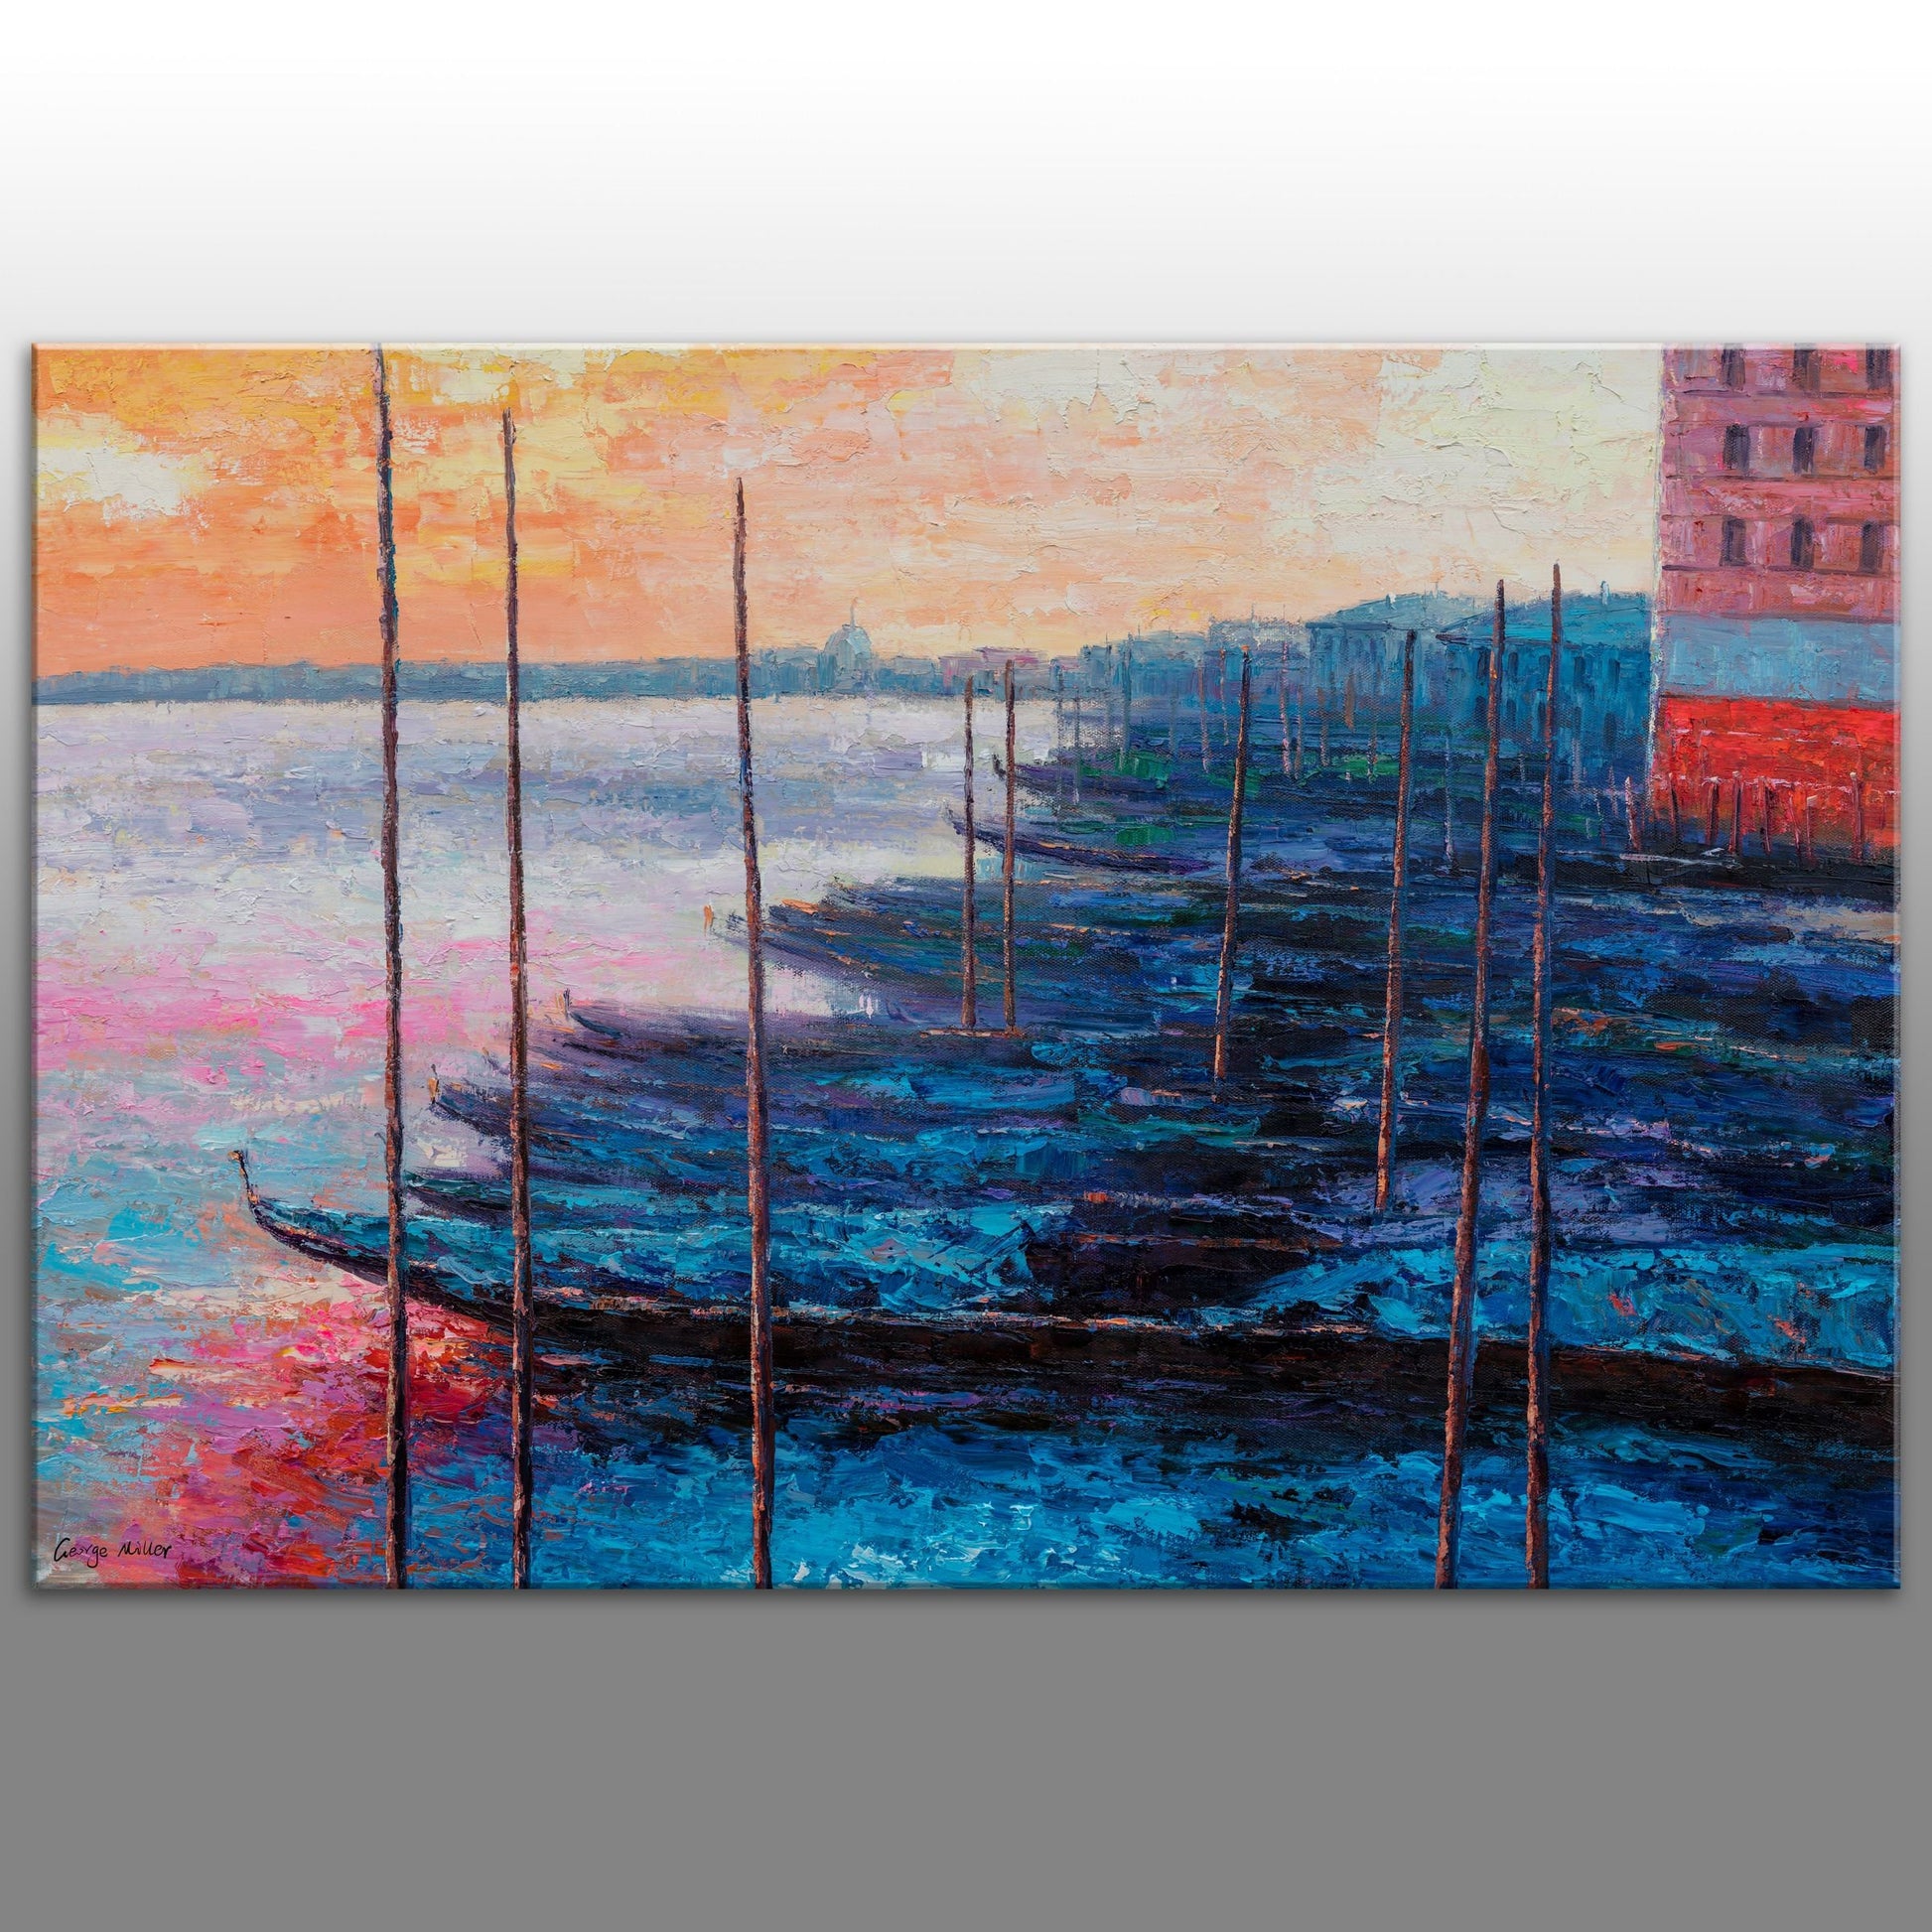 Large Oil Painting Venice Grand Canal Gondola at Dawn, Original Abstract Art, Original Oil Painting Landscape, Modern Painting, Oil Painting